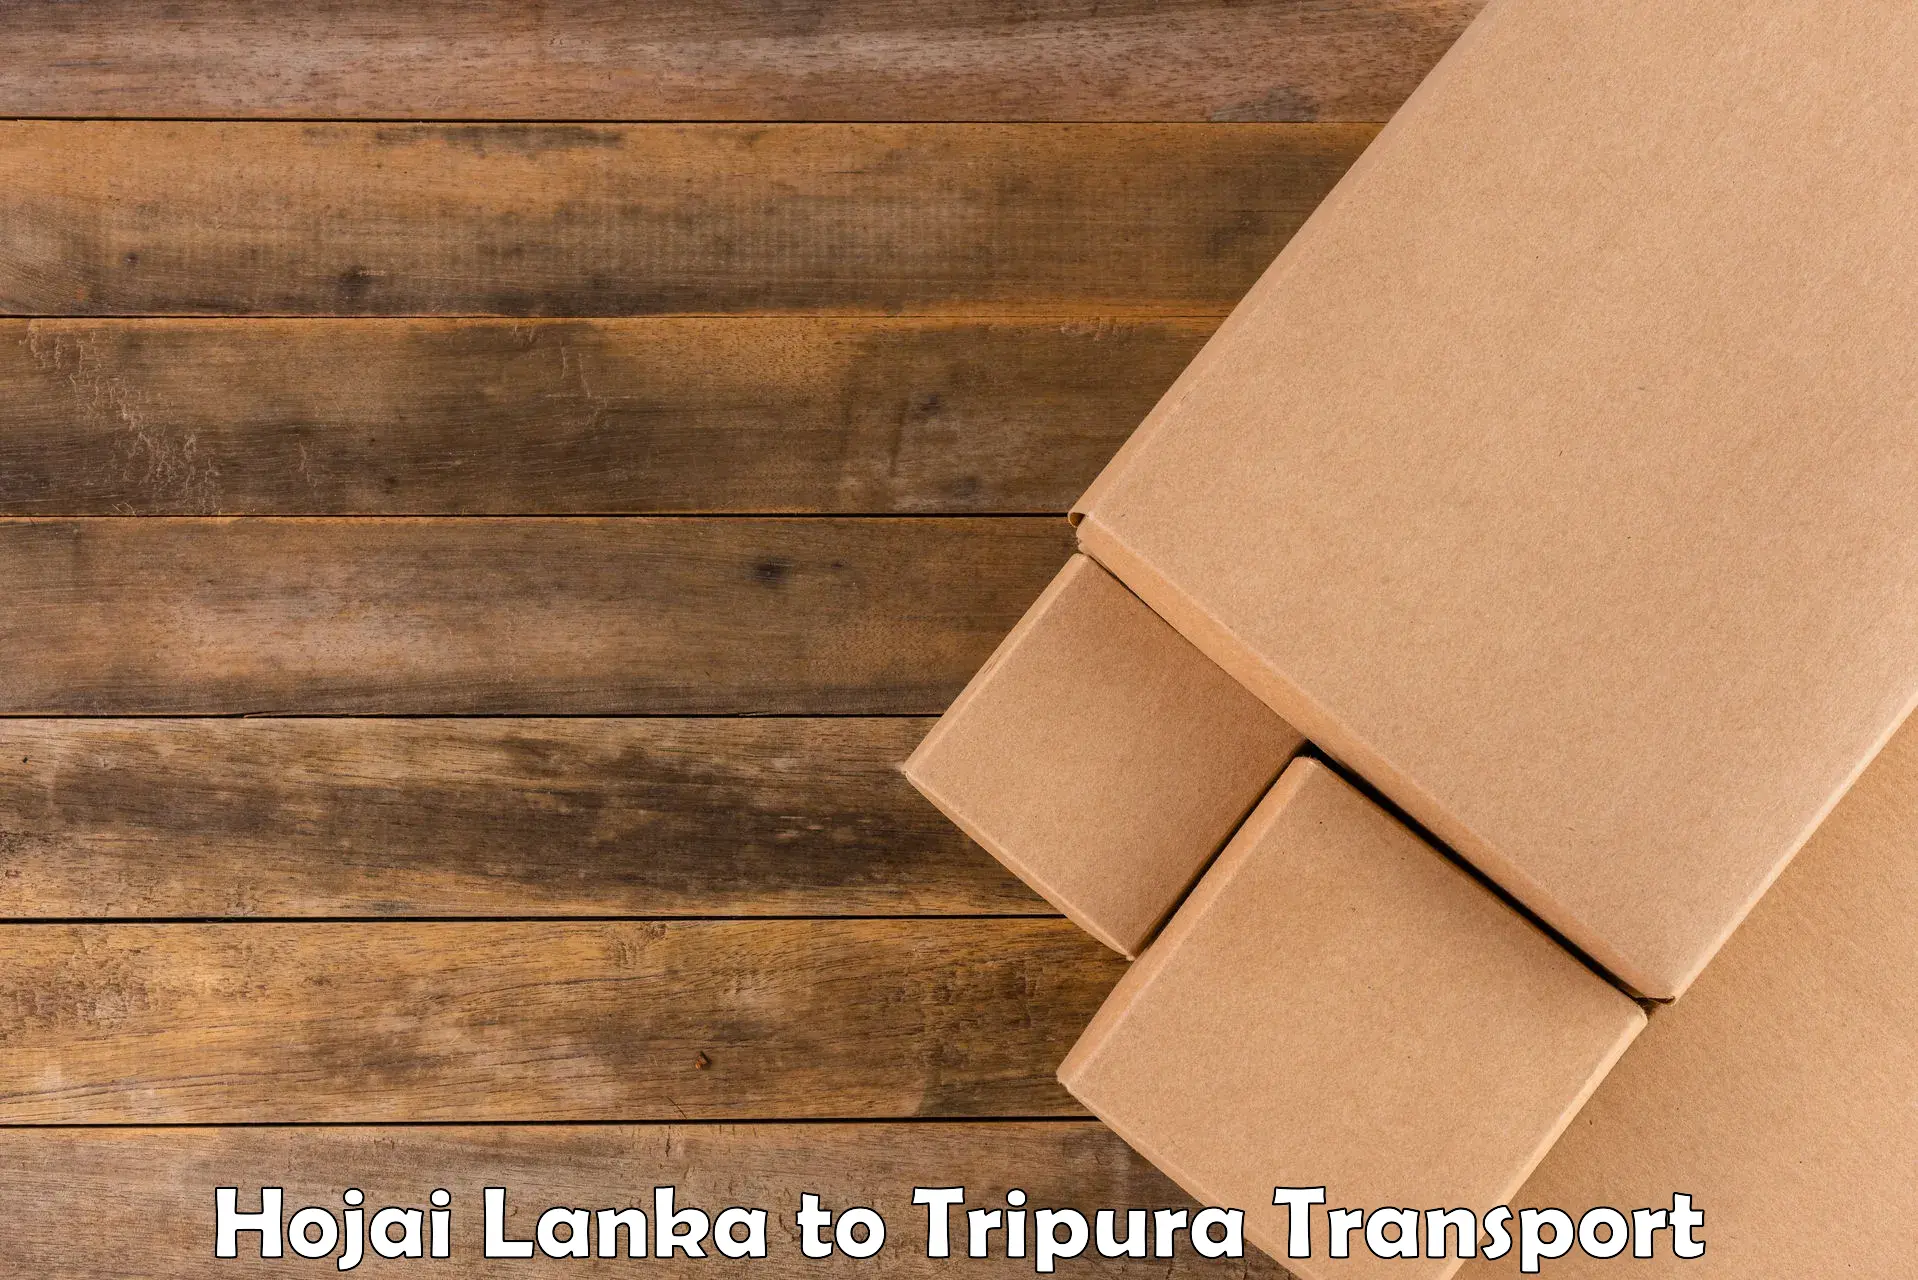 Logistics transportation services Hojai Lanka to Udaipur Tripura